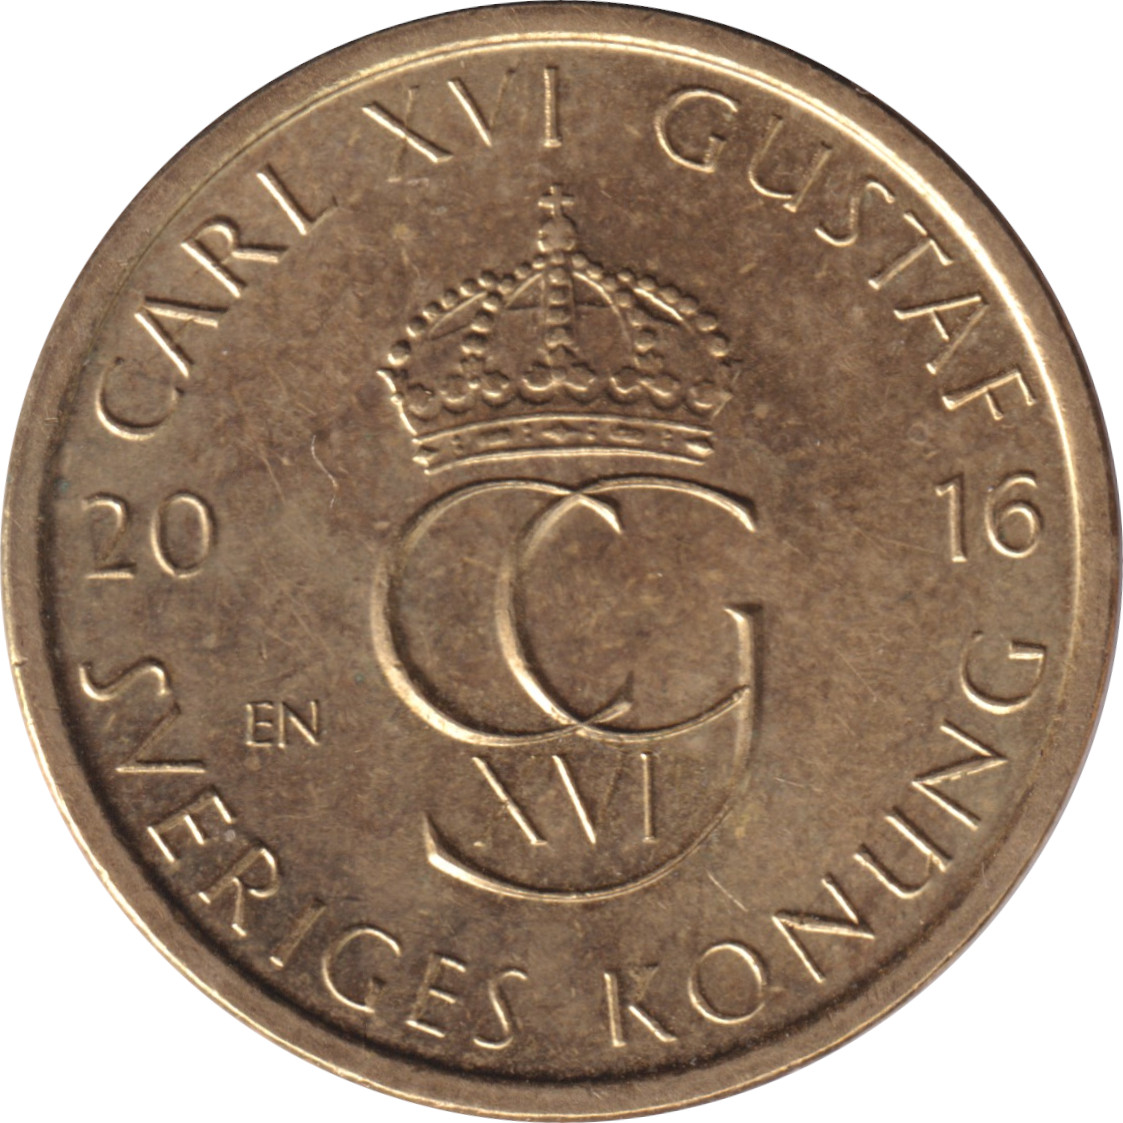 5 kronor - Charles XVI - Old head